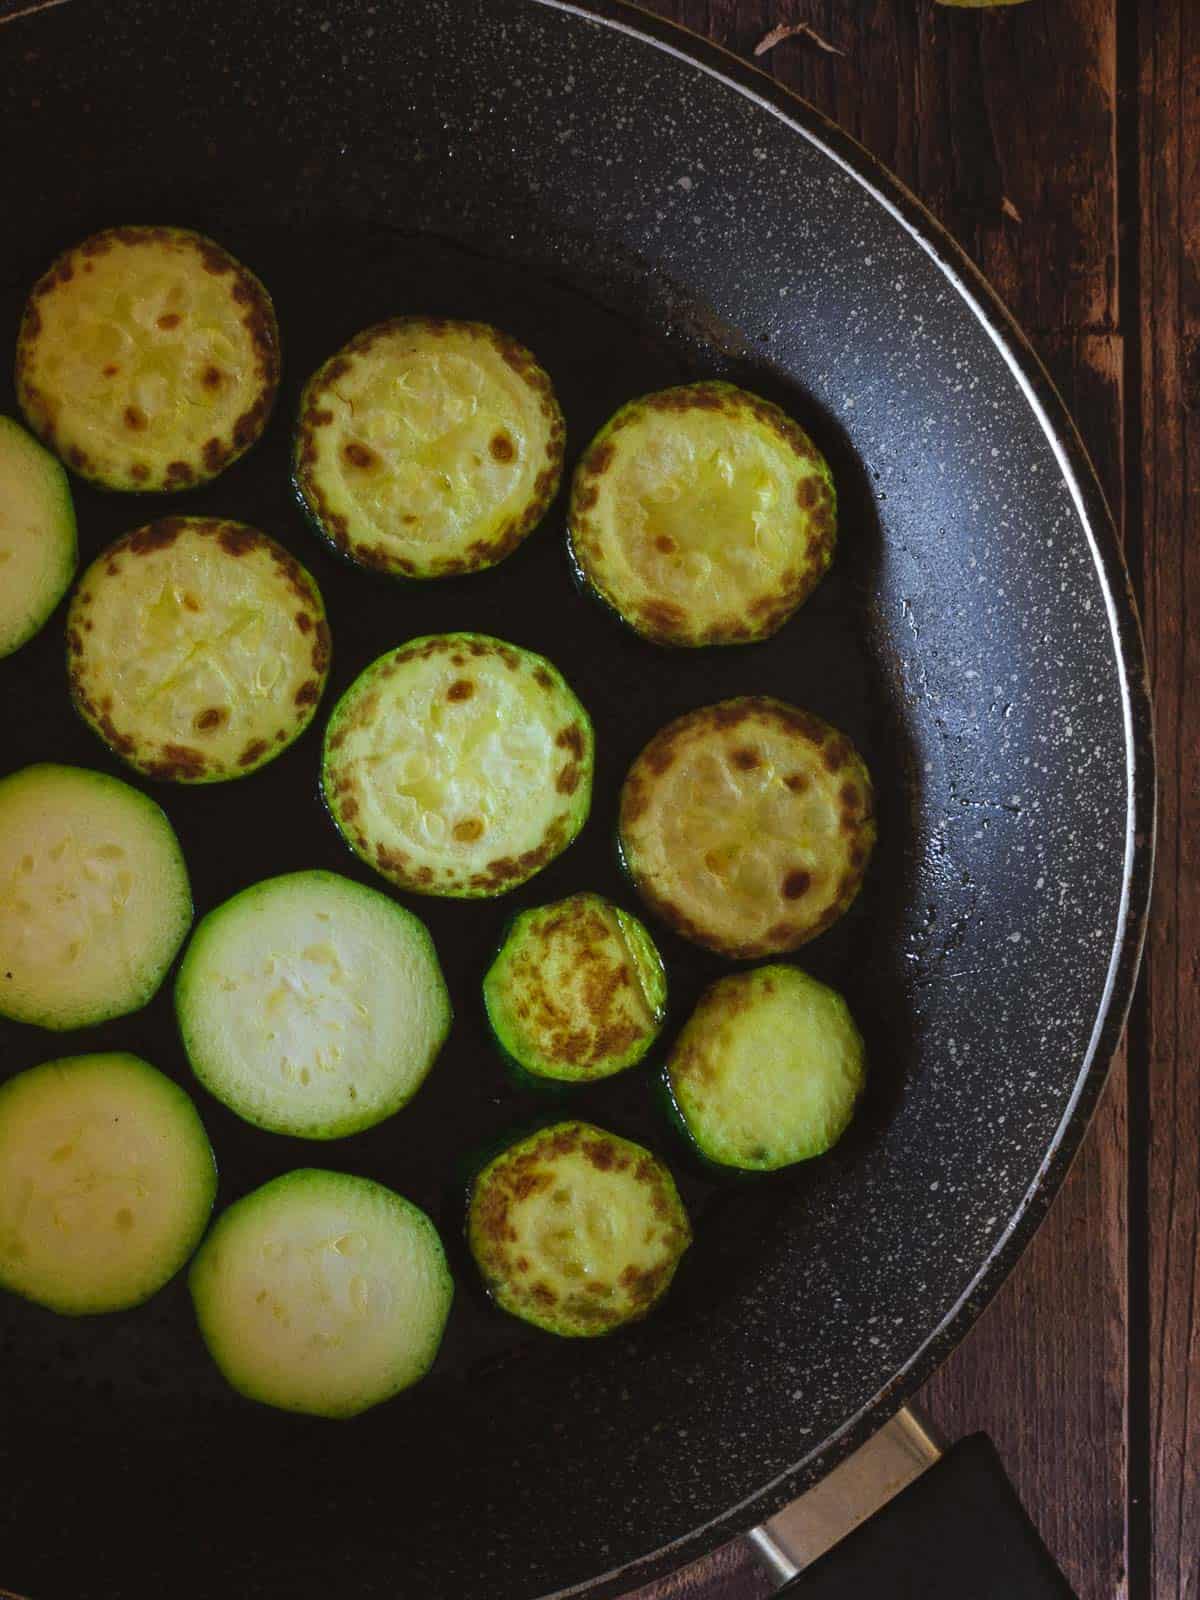 rodajas de zucchini asadas para risotto de verduras.